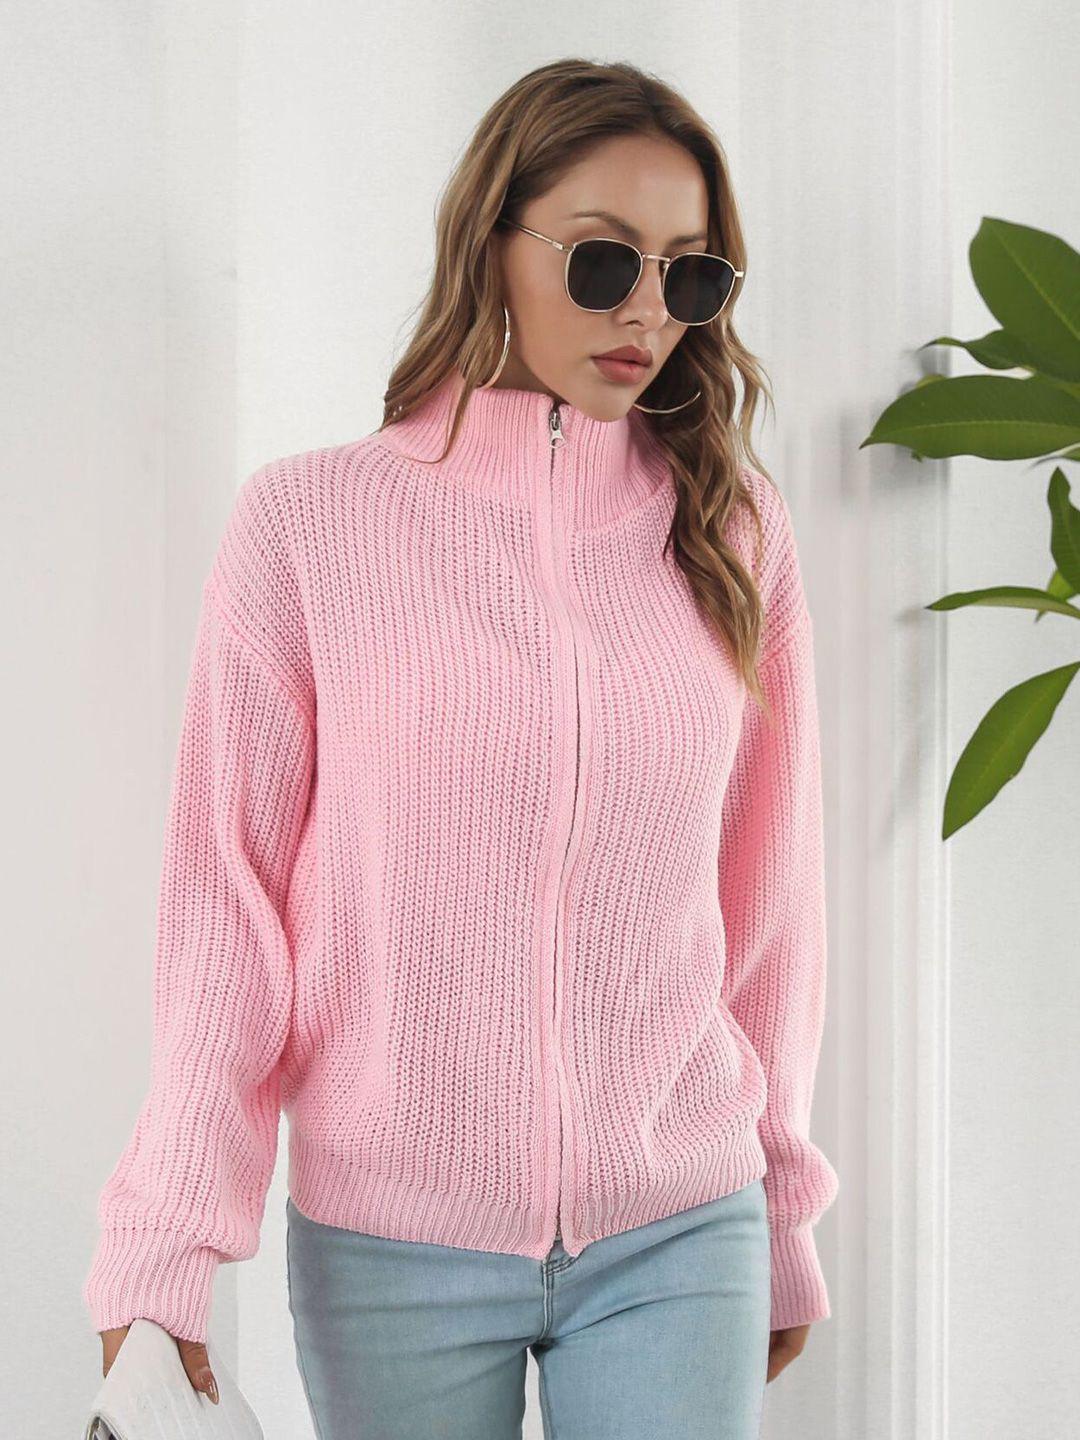 stylecast-women-pink-cardigan-sweater